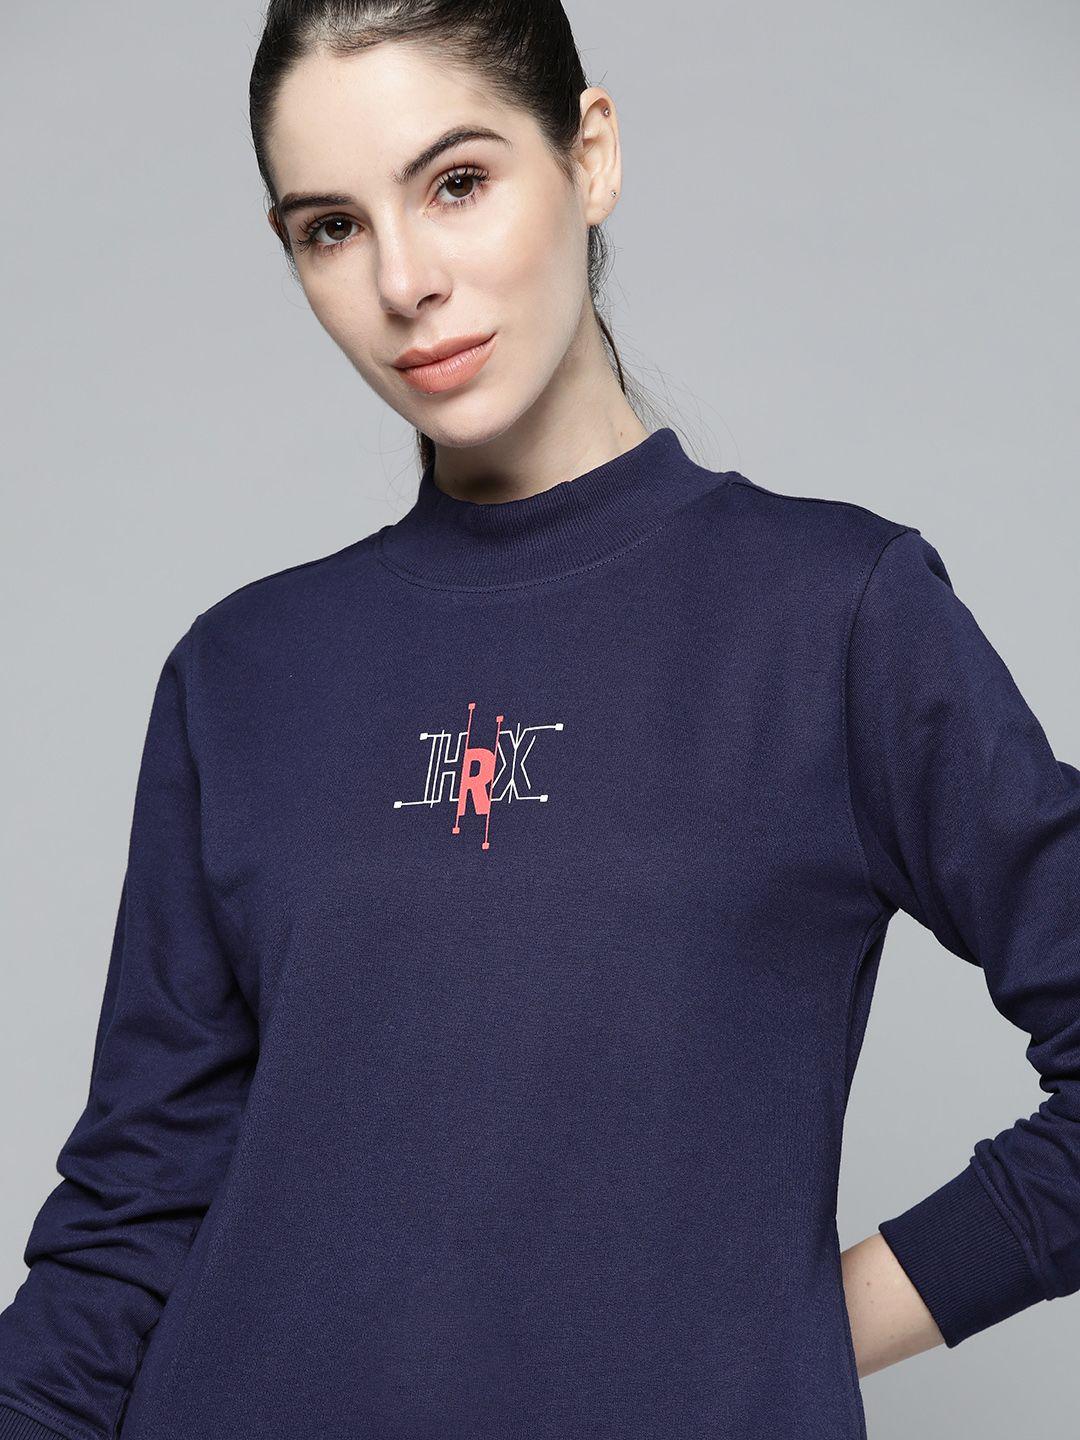 hrx-by-hrithik-roshan-women-navy-blue-rapid-dry-technology-printed-sweatshirt